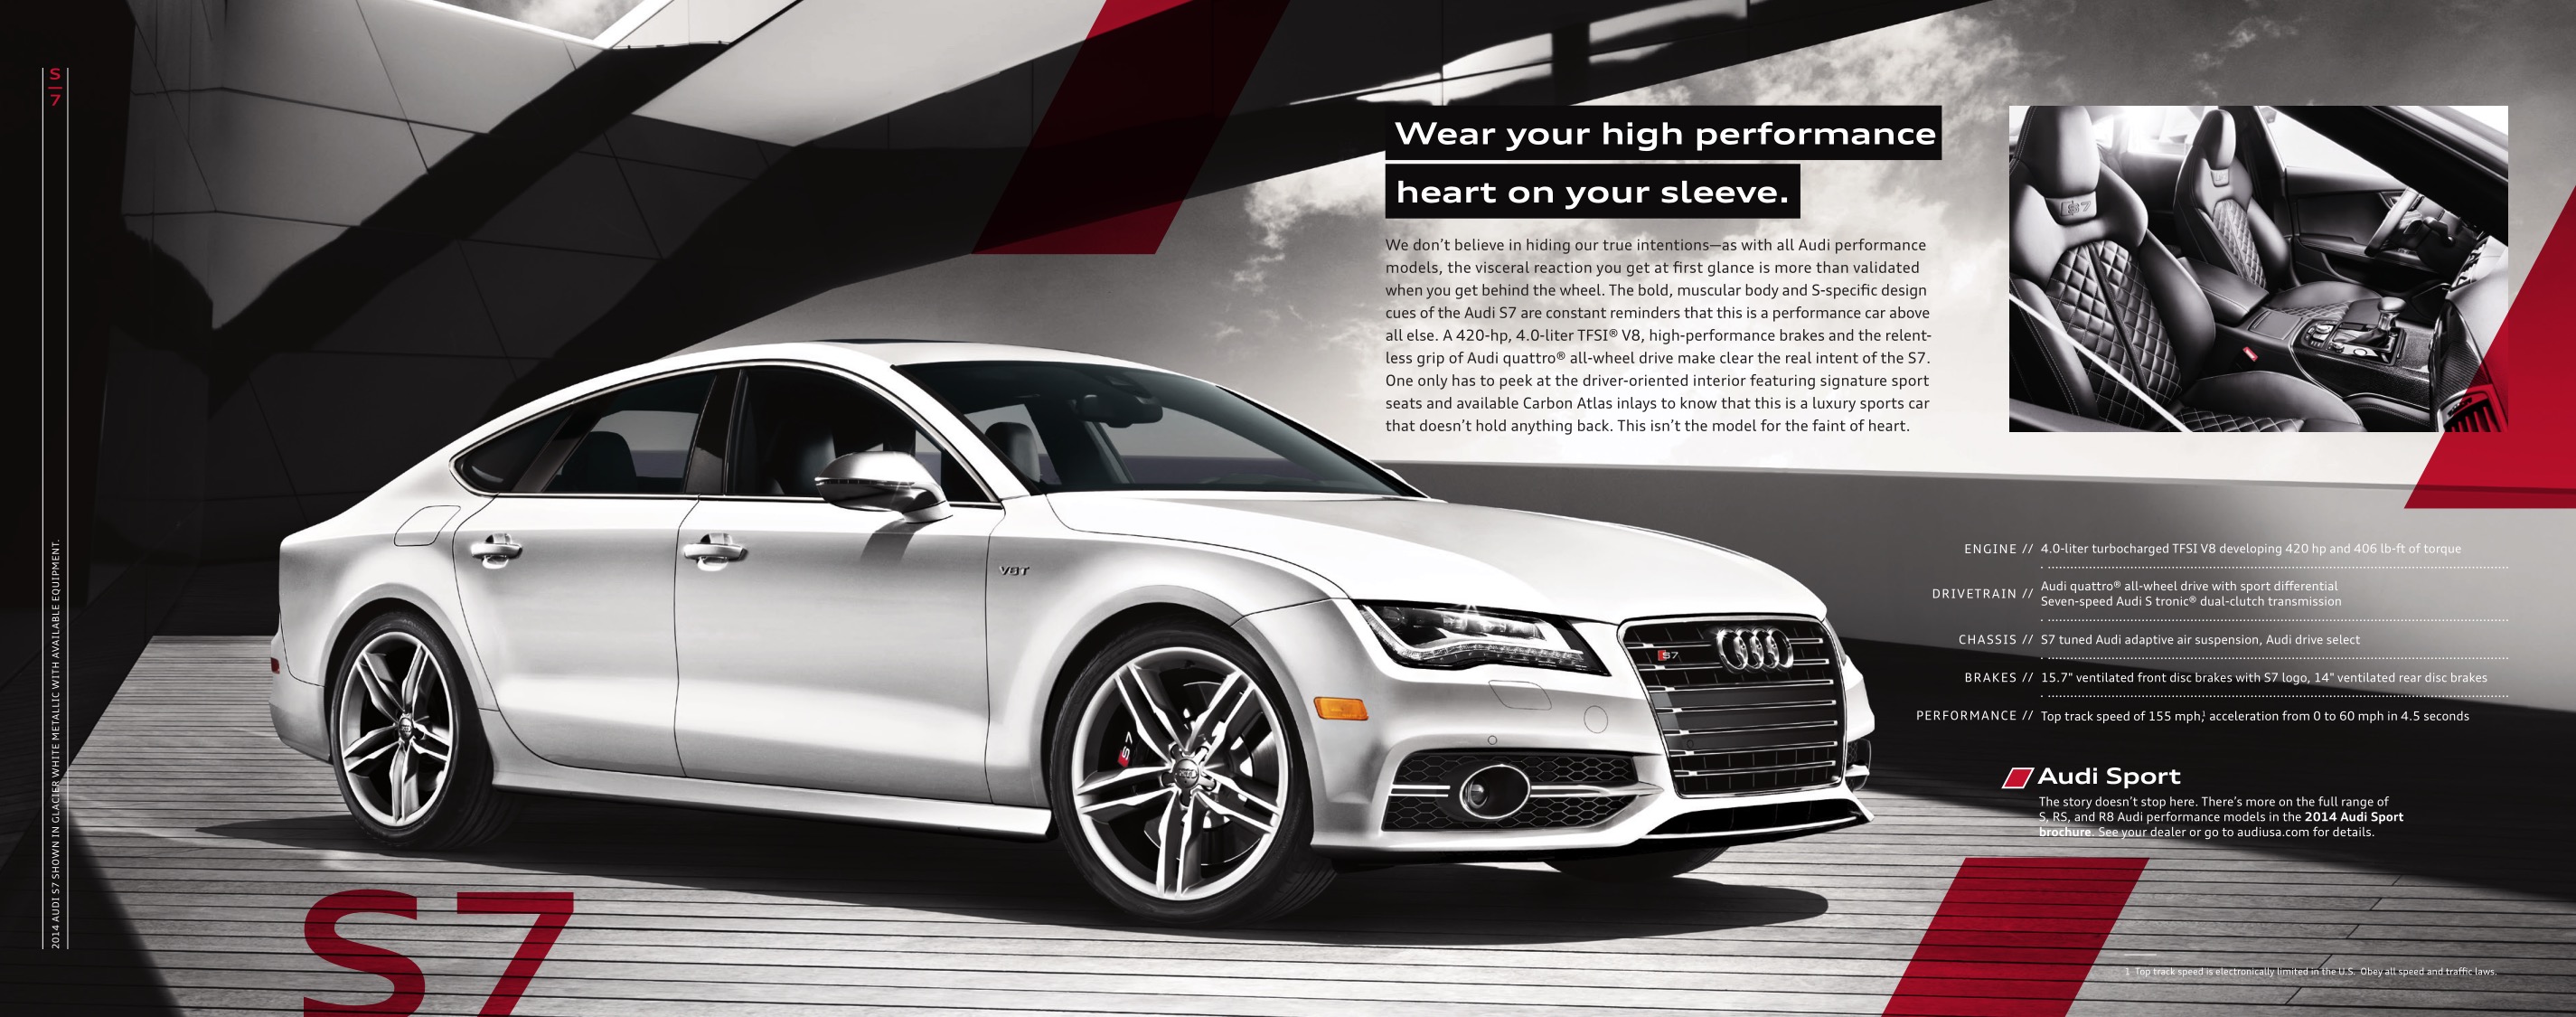 2014 Audi A7 Brochure Page 8